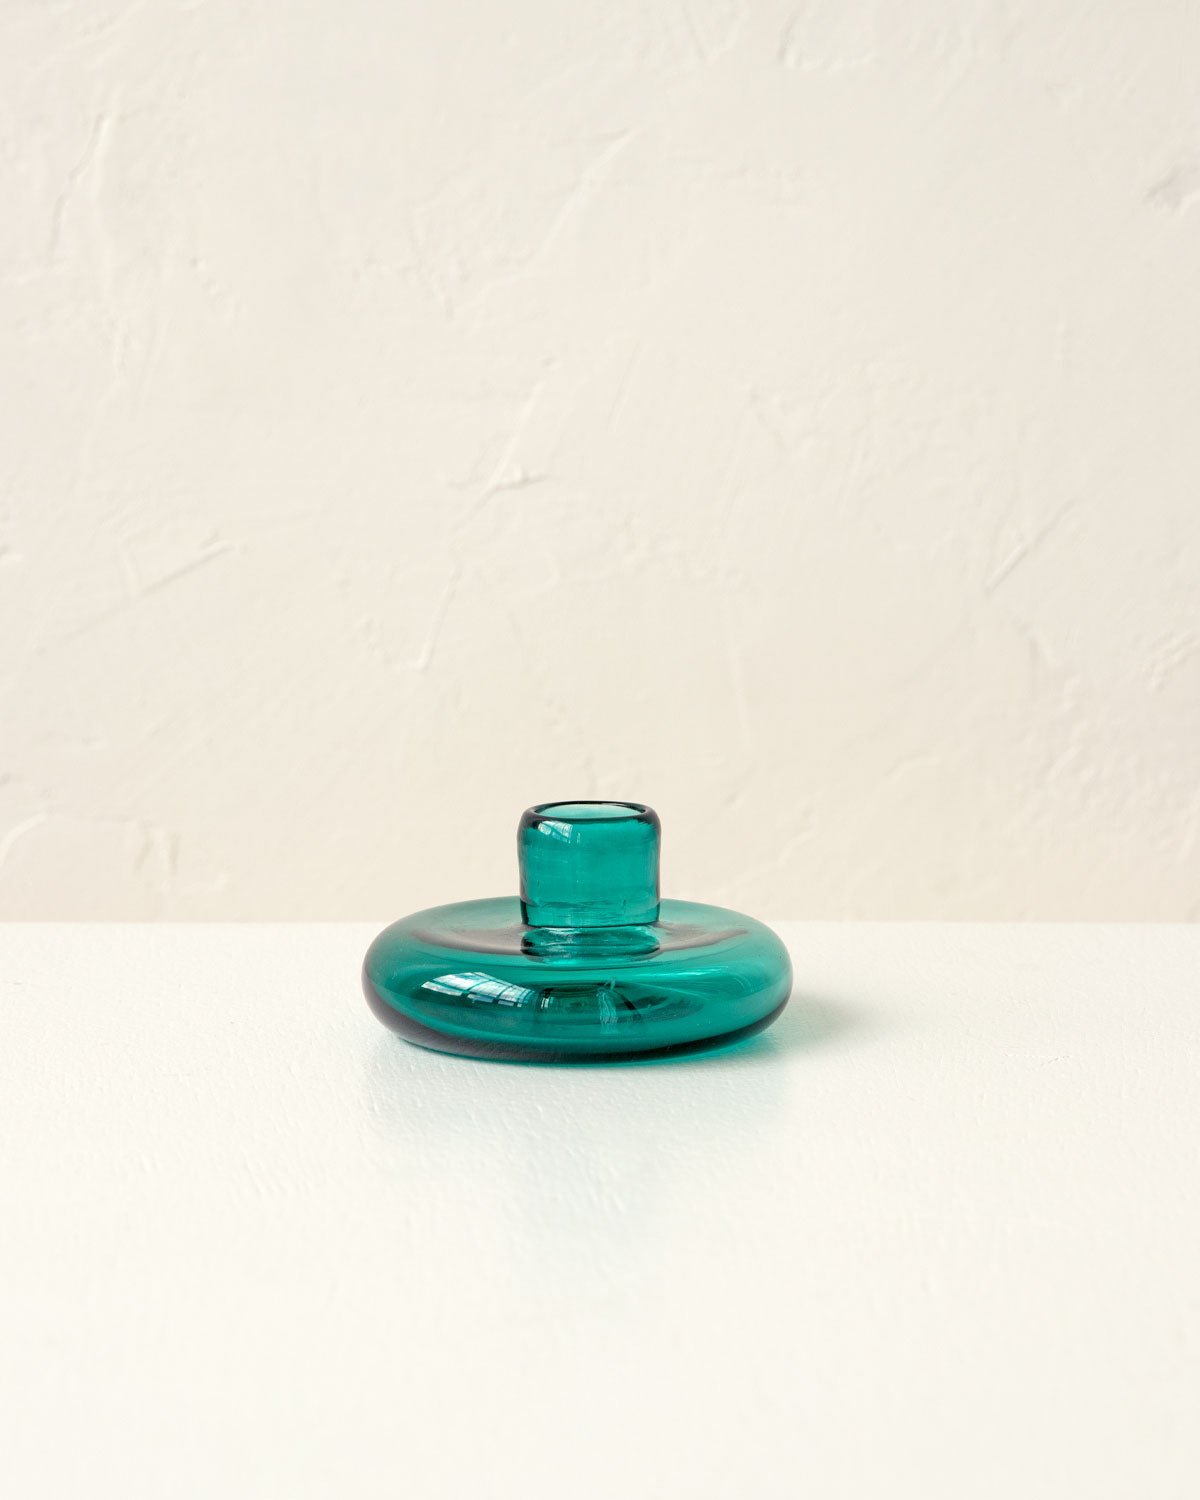 Short teal green glass candlestick holder, handmade glass taper candle holder